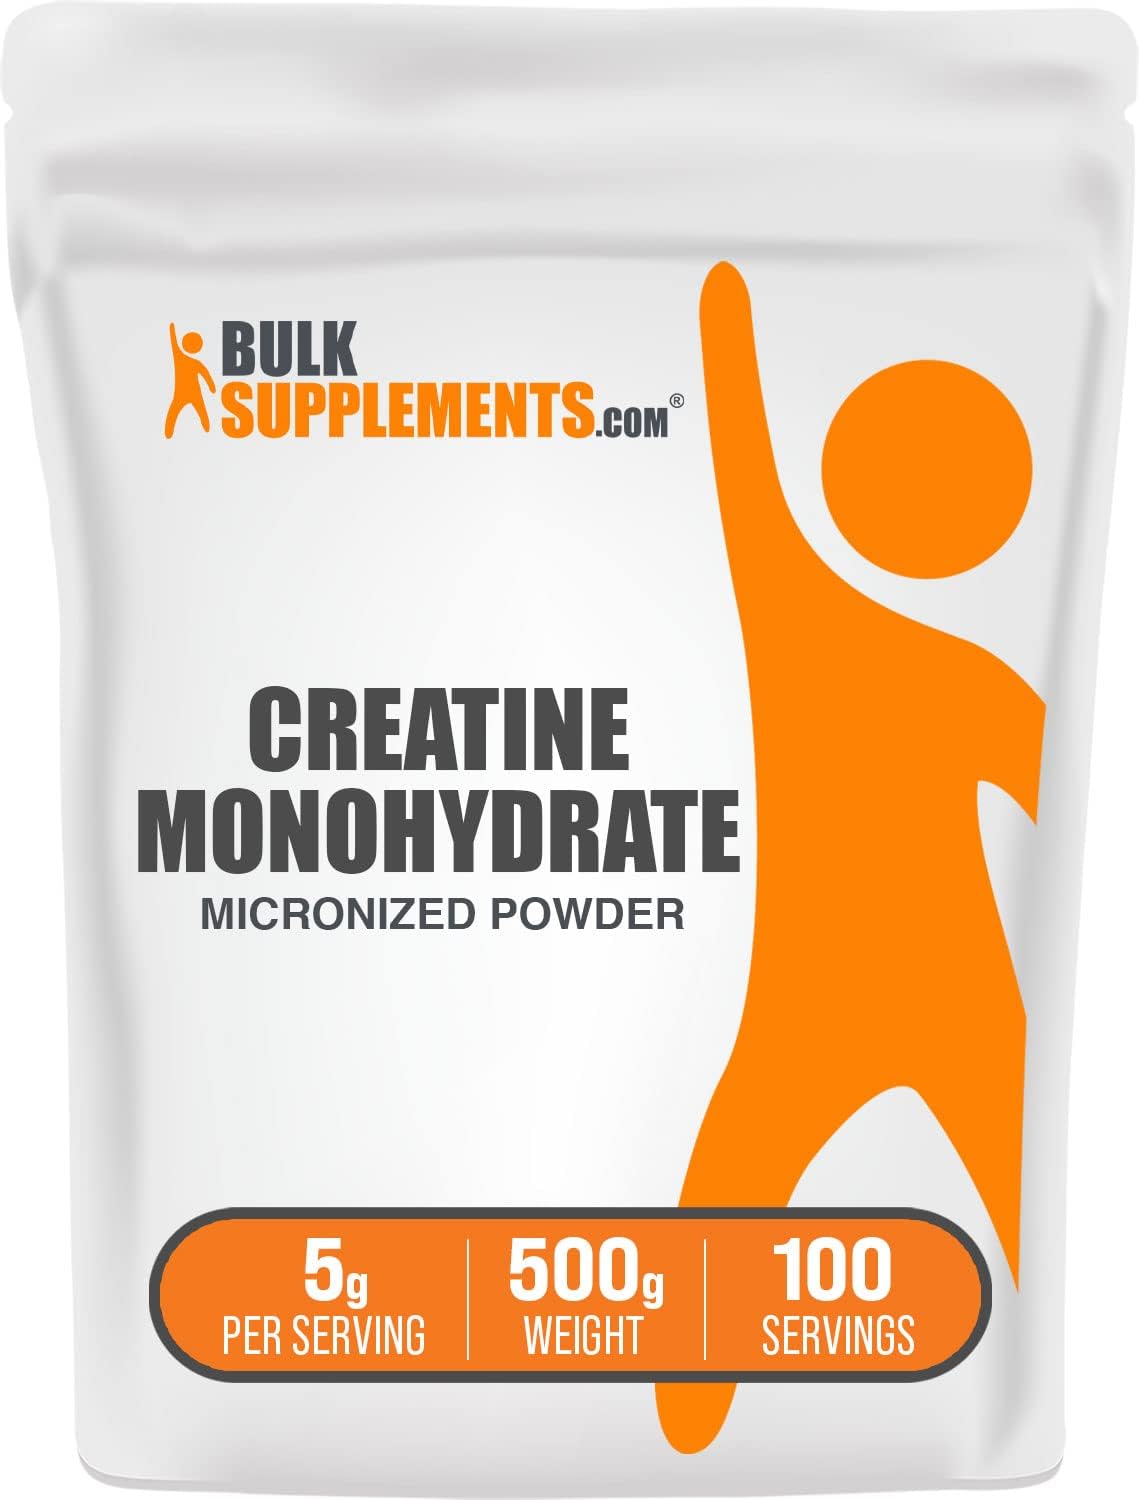 Exploring the Benefits of Bulksupplements.com Creatine Monohydrate Powder